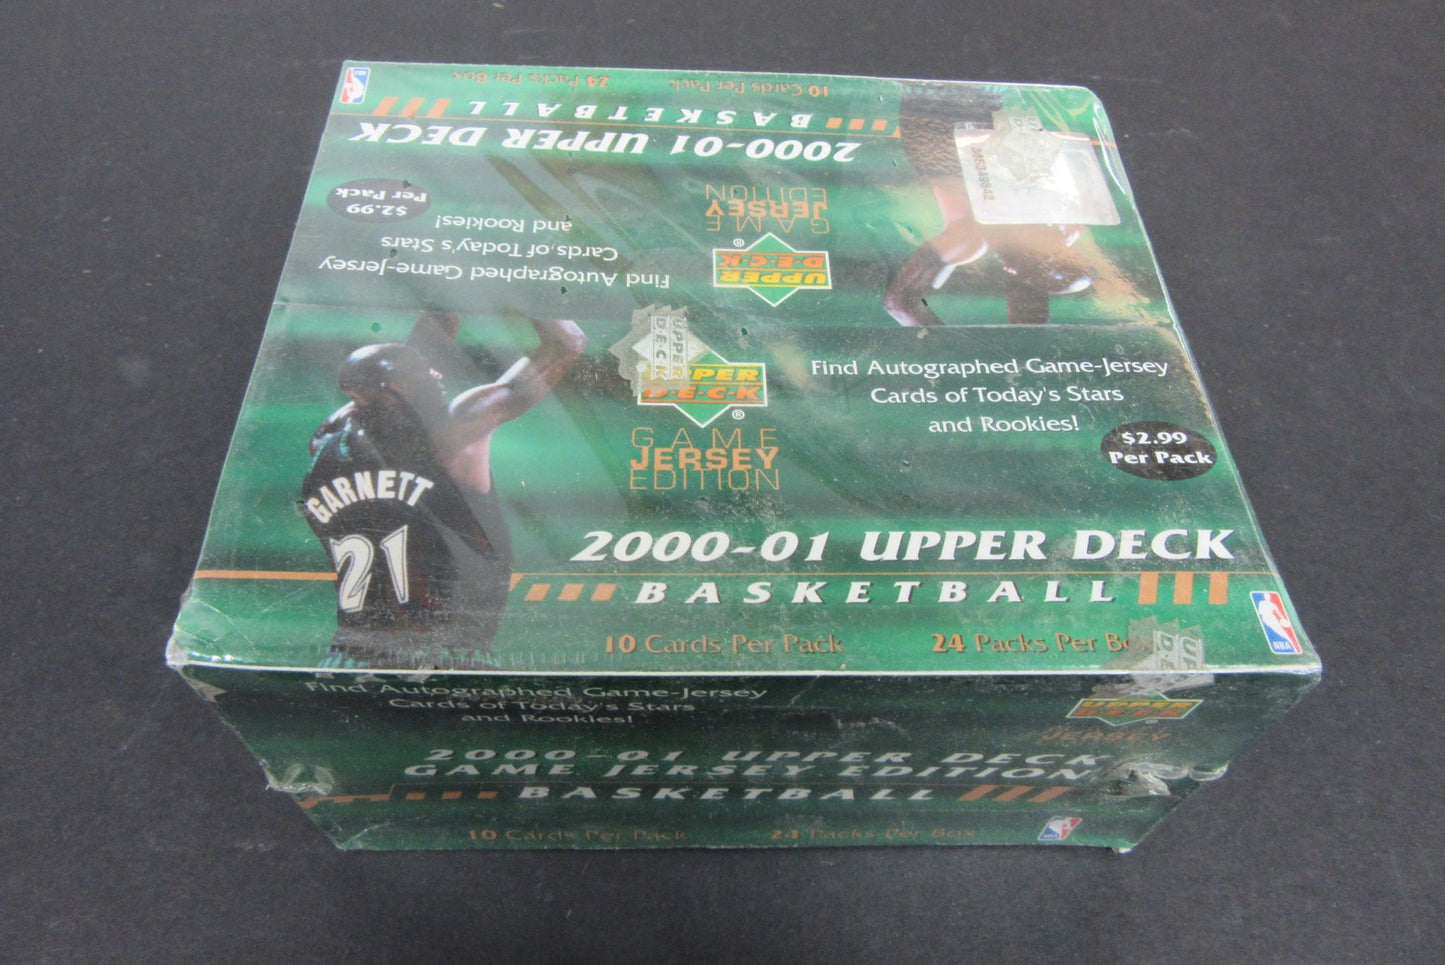 2000/01 Upper Deck Basketball Series 2 (Game Jersey) Box (Retail)